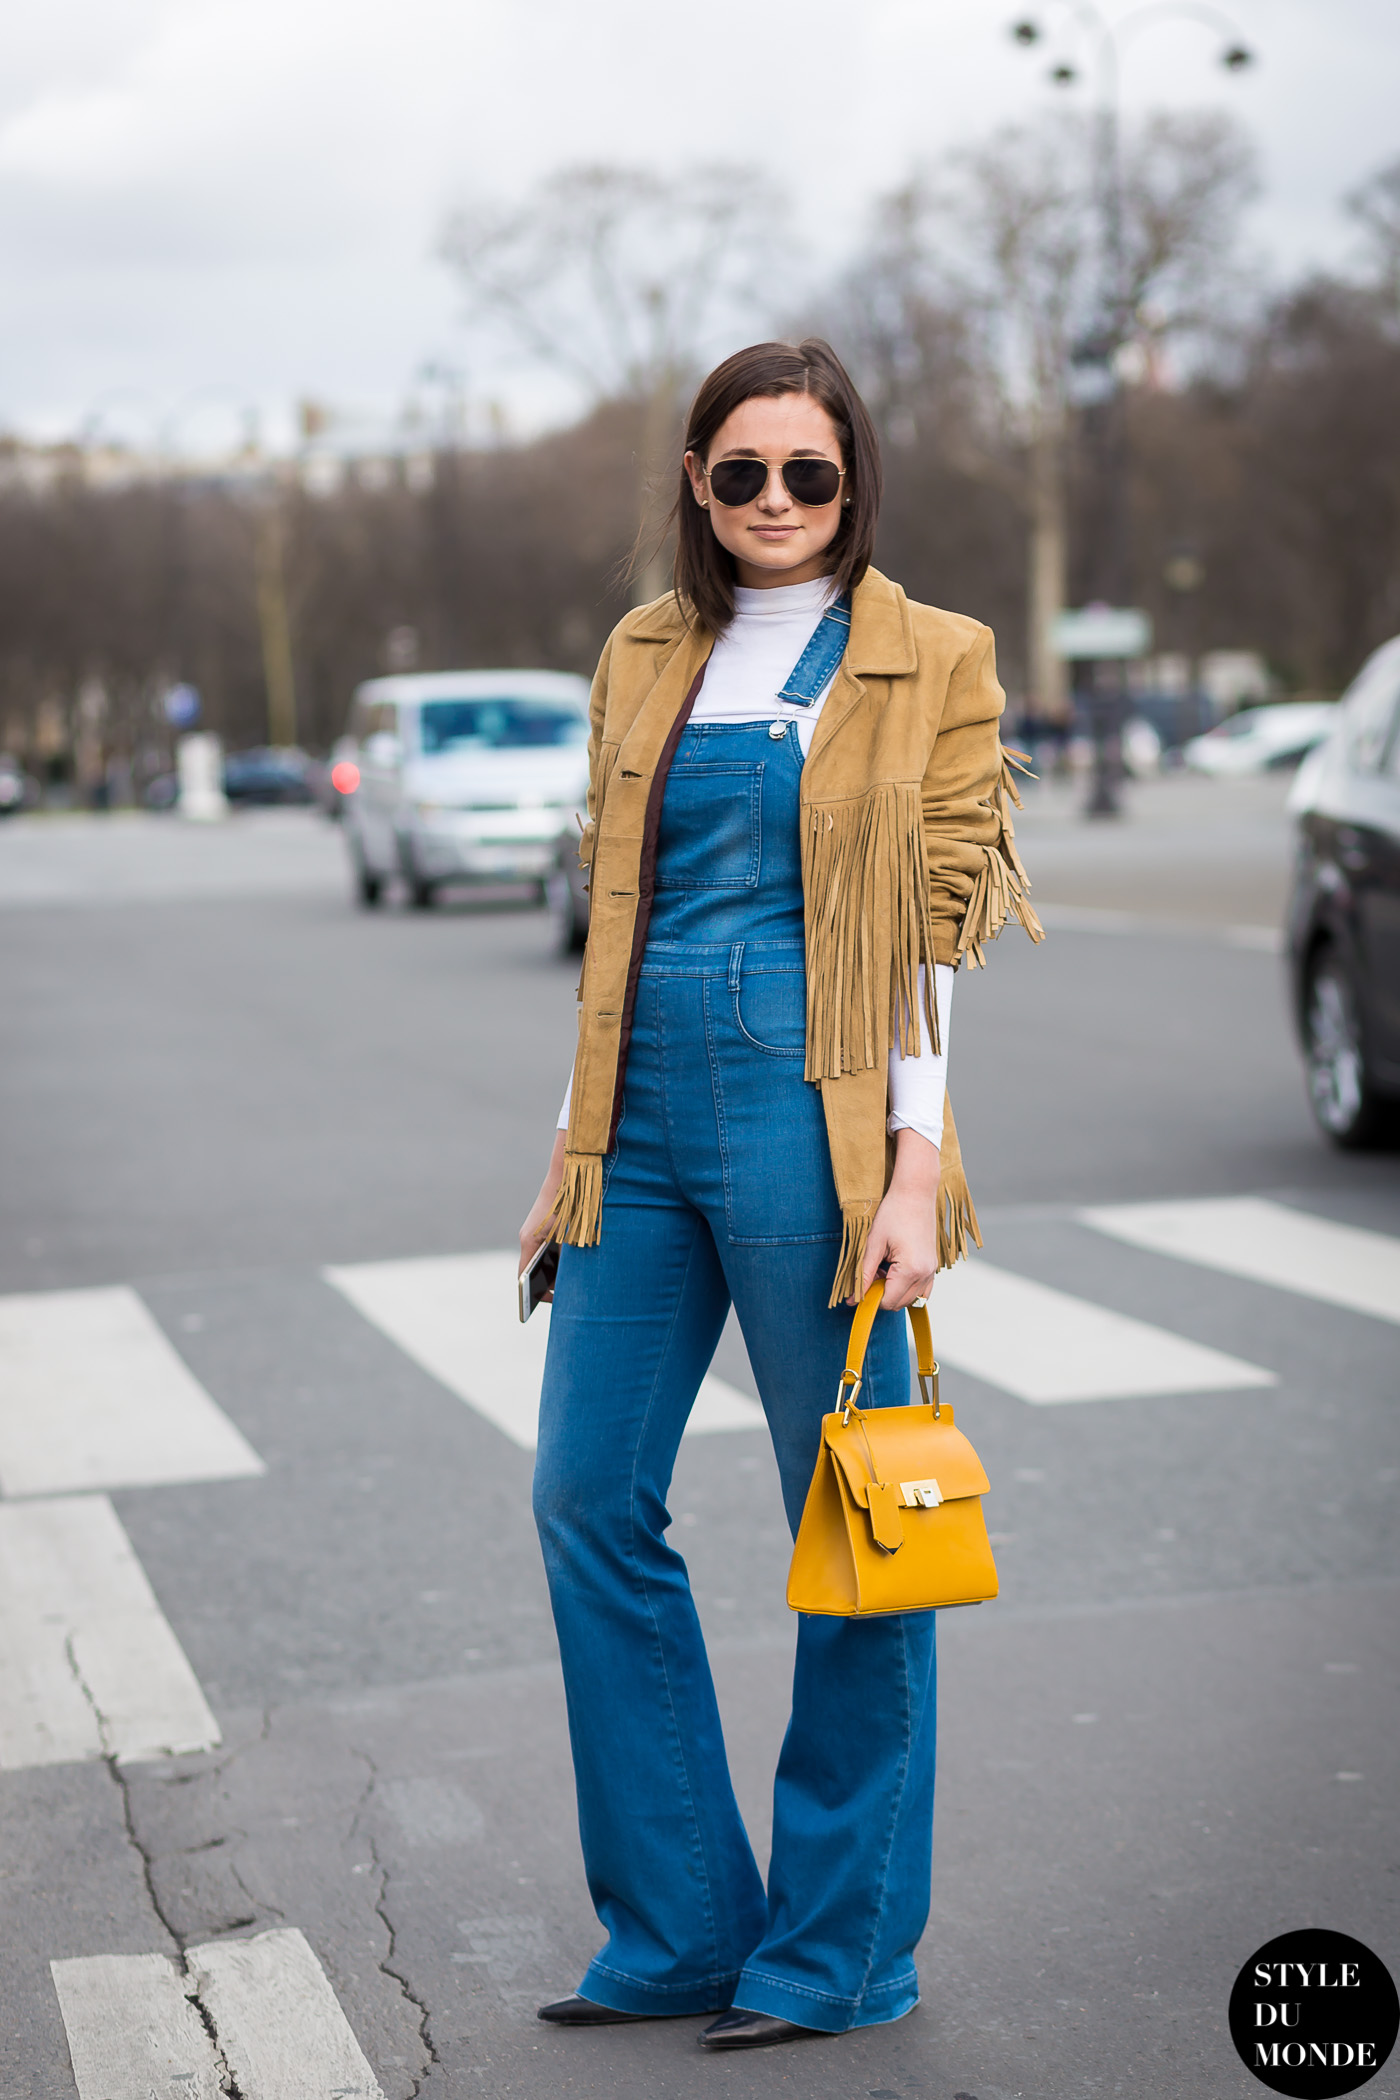 Paris Fashion Week FW 2015 Street Style: Danielle - STYLE DU MONDE ...